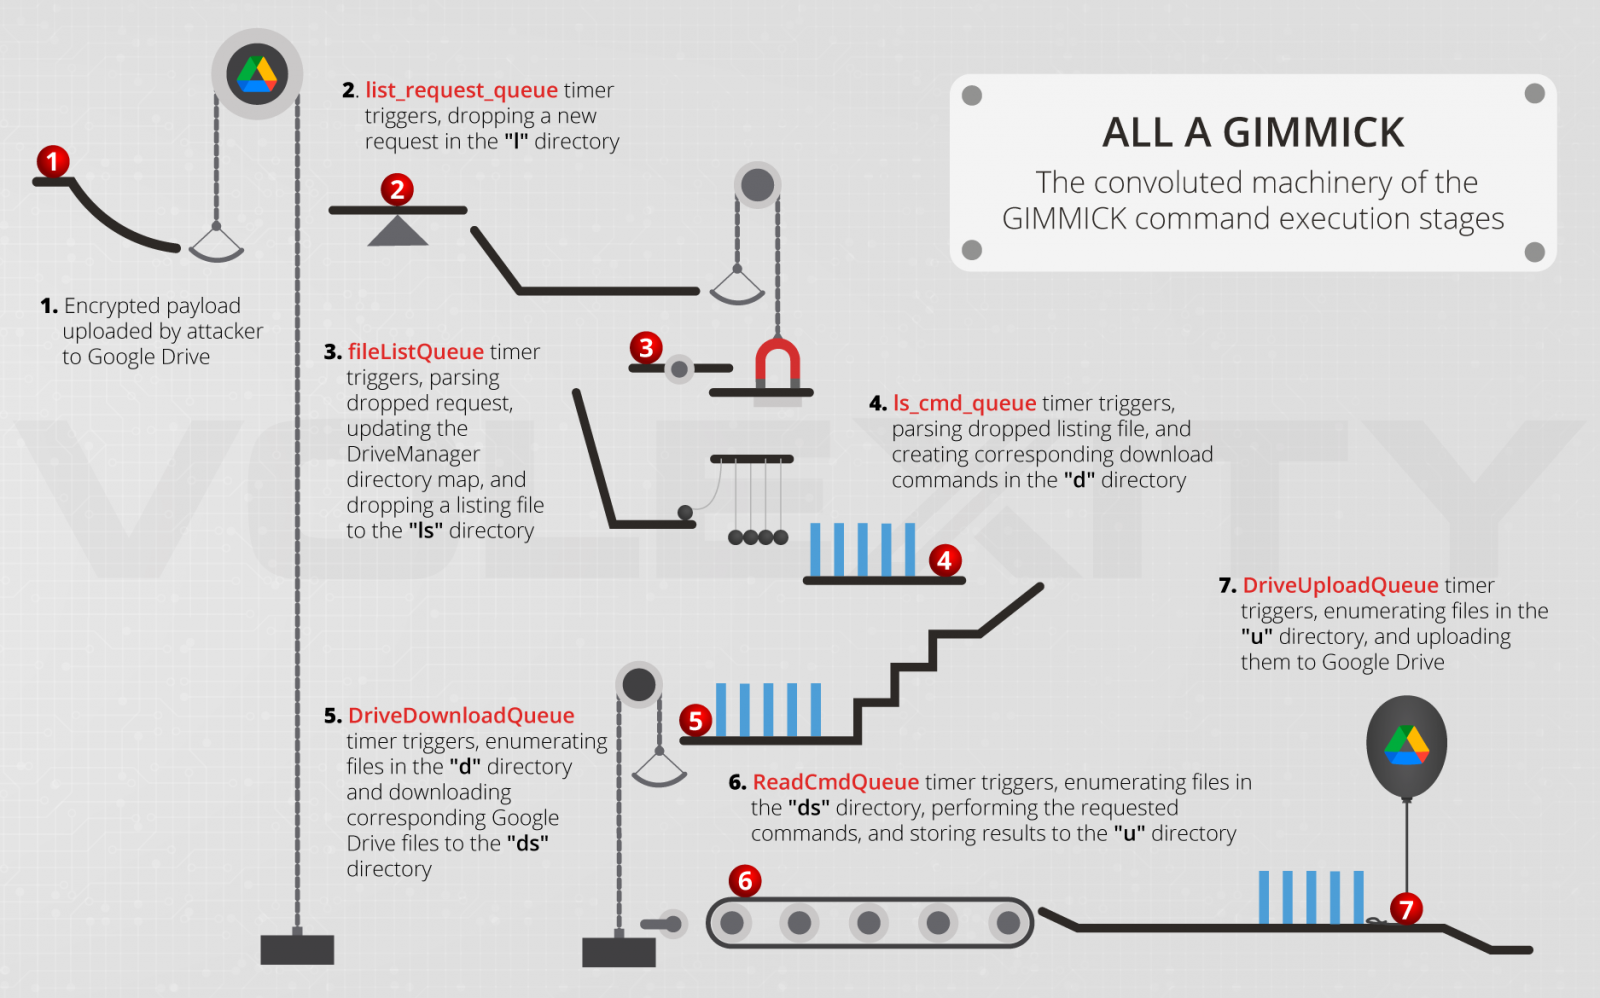 GIMMICK's complex workflow